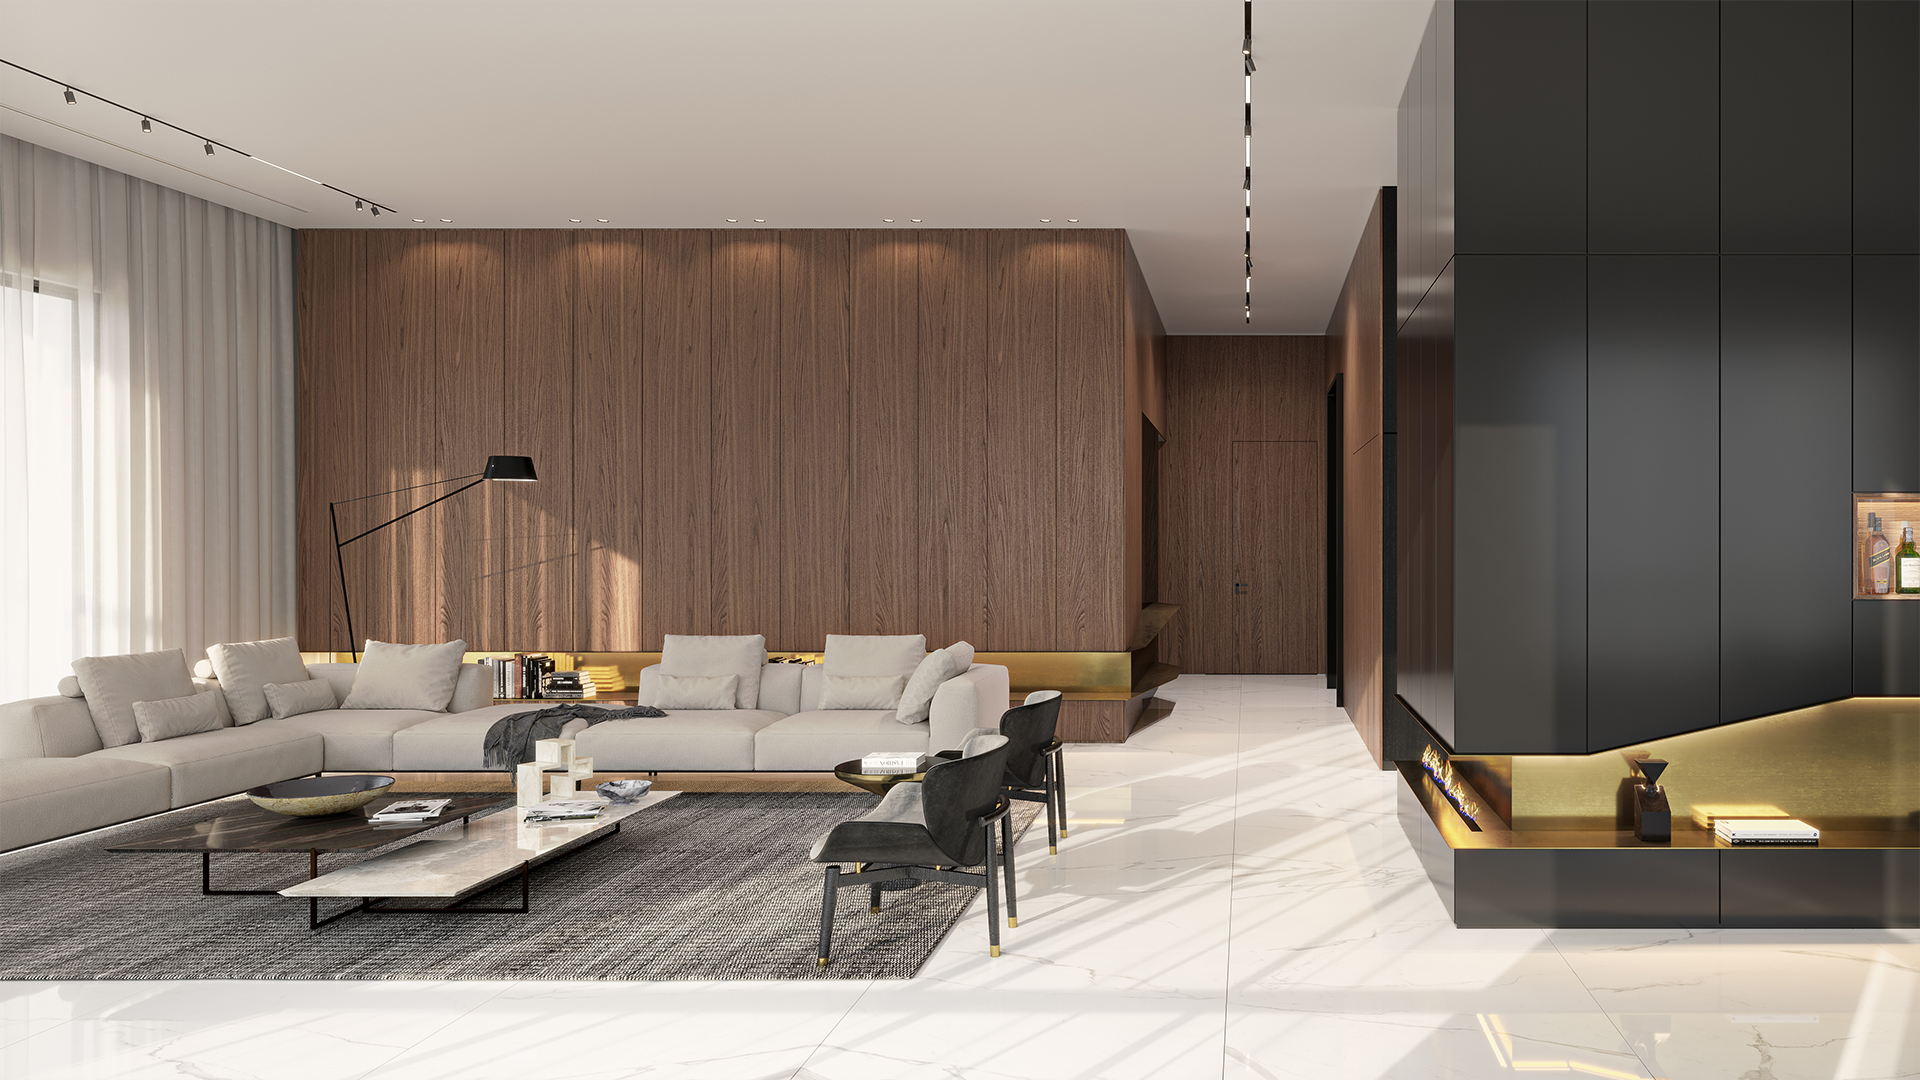 Maayan-Golan_Architectural-Visualization_interior-visualization_penthouse-apartment_livingroom_design-by-elad-ben-nahmias_07